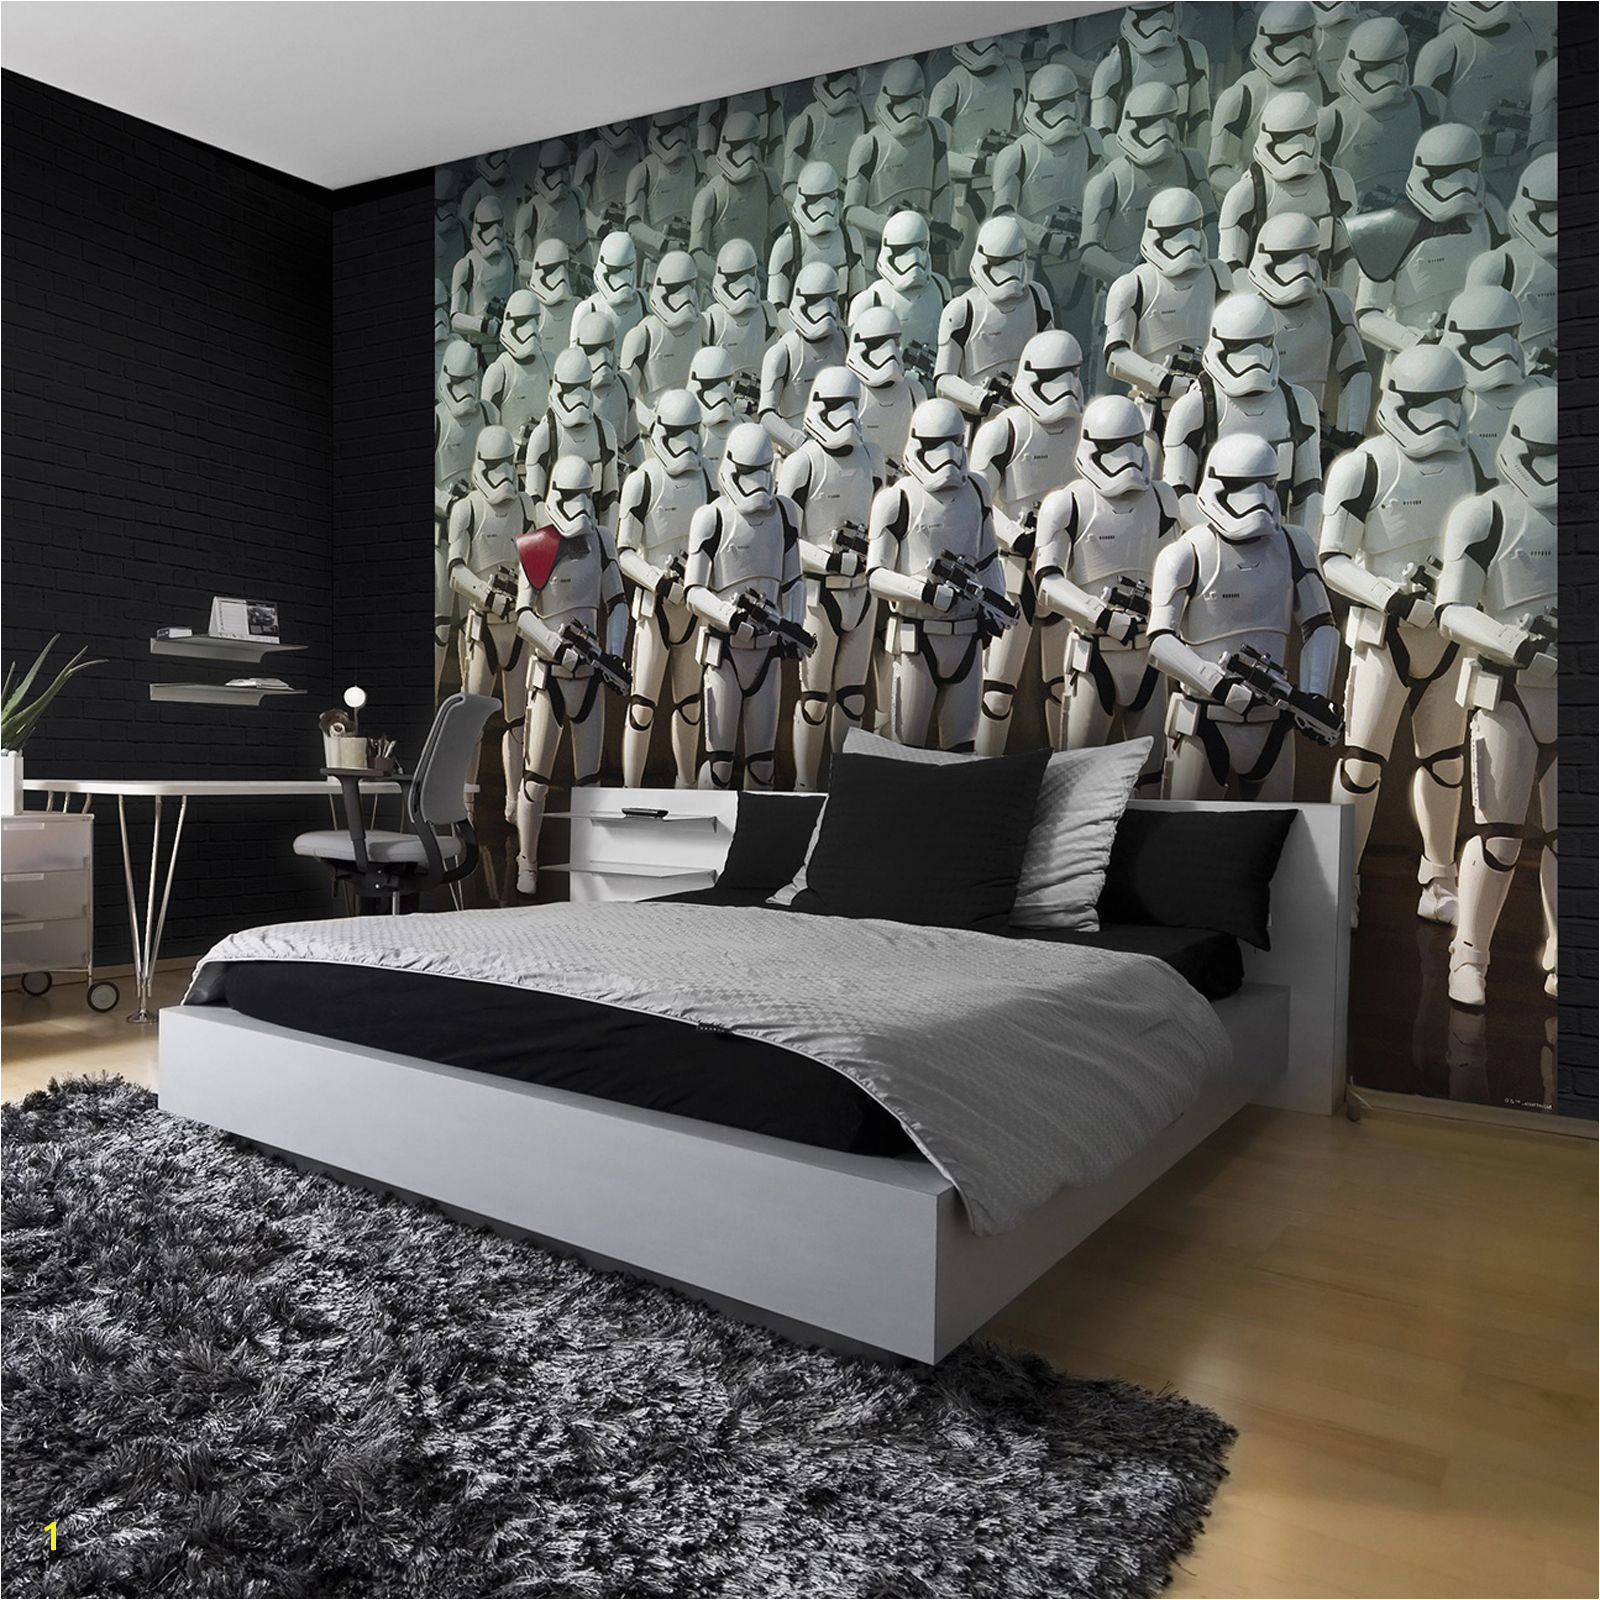 Star Wars Room Murals Star Wars Stormtrooper Wall Mural Dream Bedroom …